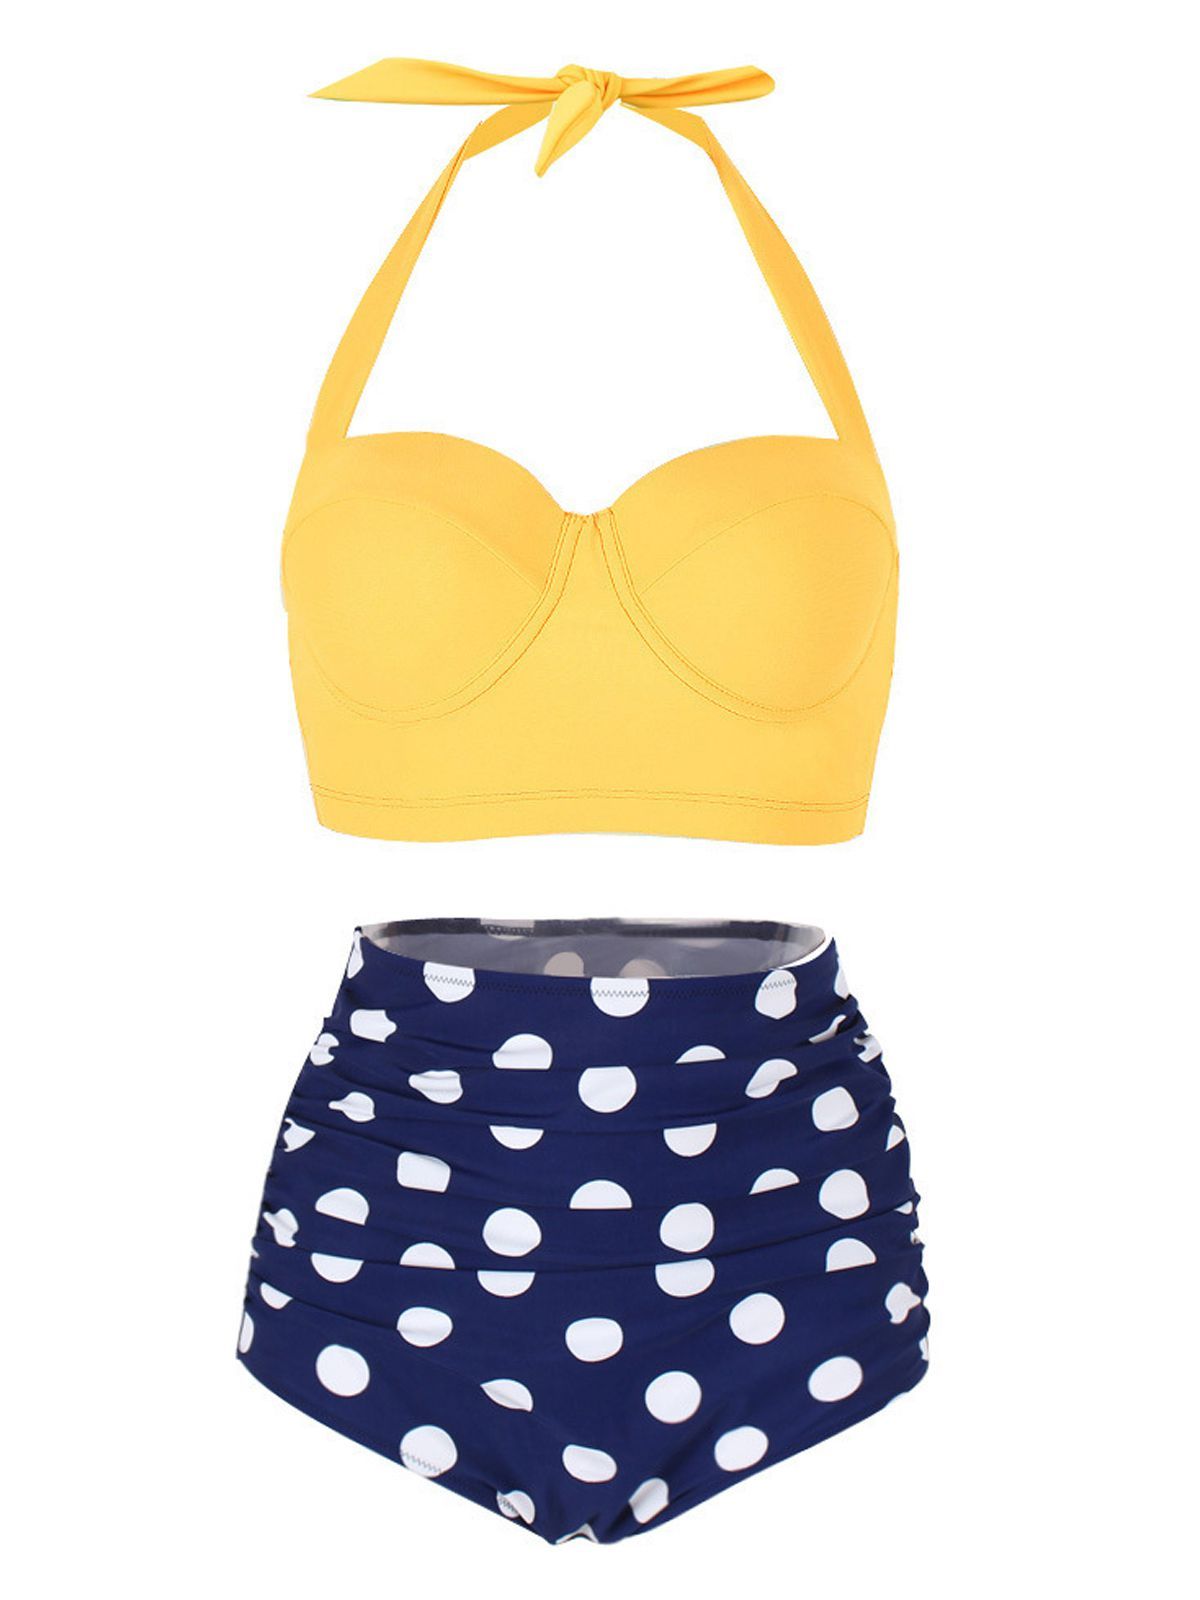 Yellow Navy Polka Dot Halter Pleated Bikini Plus Size Swimsuit